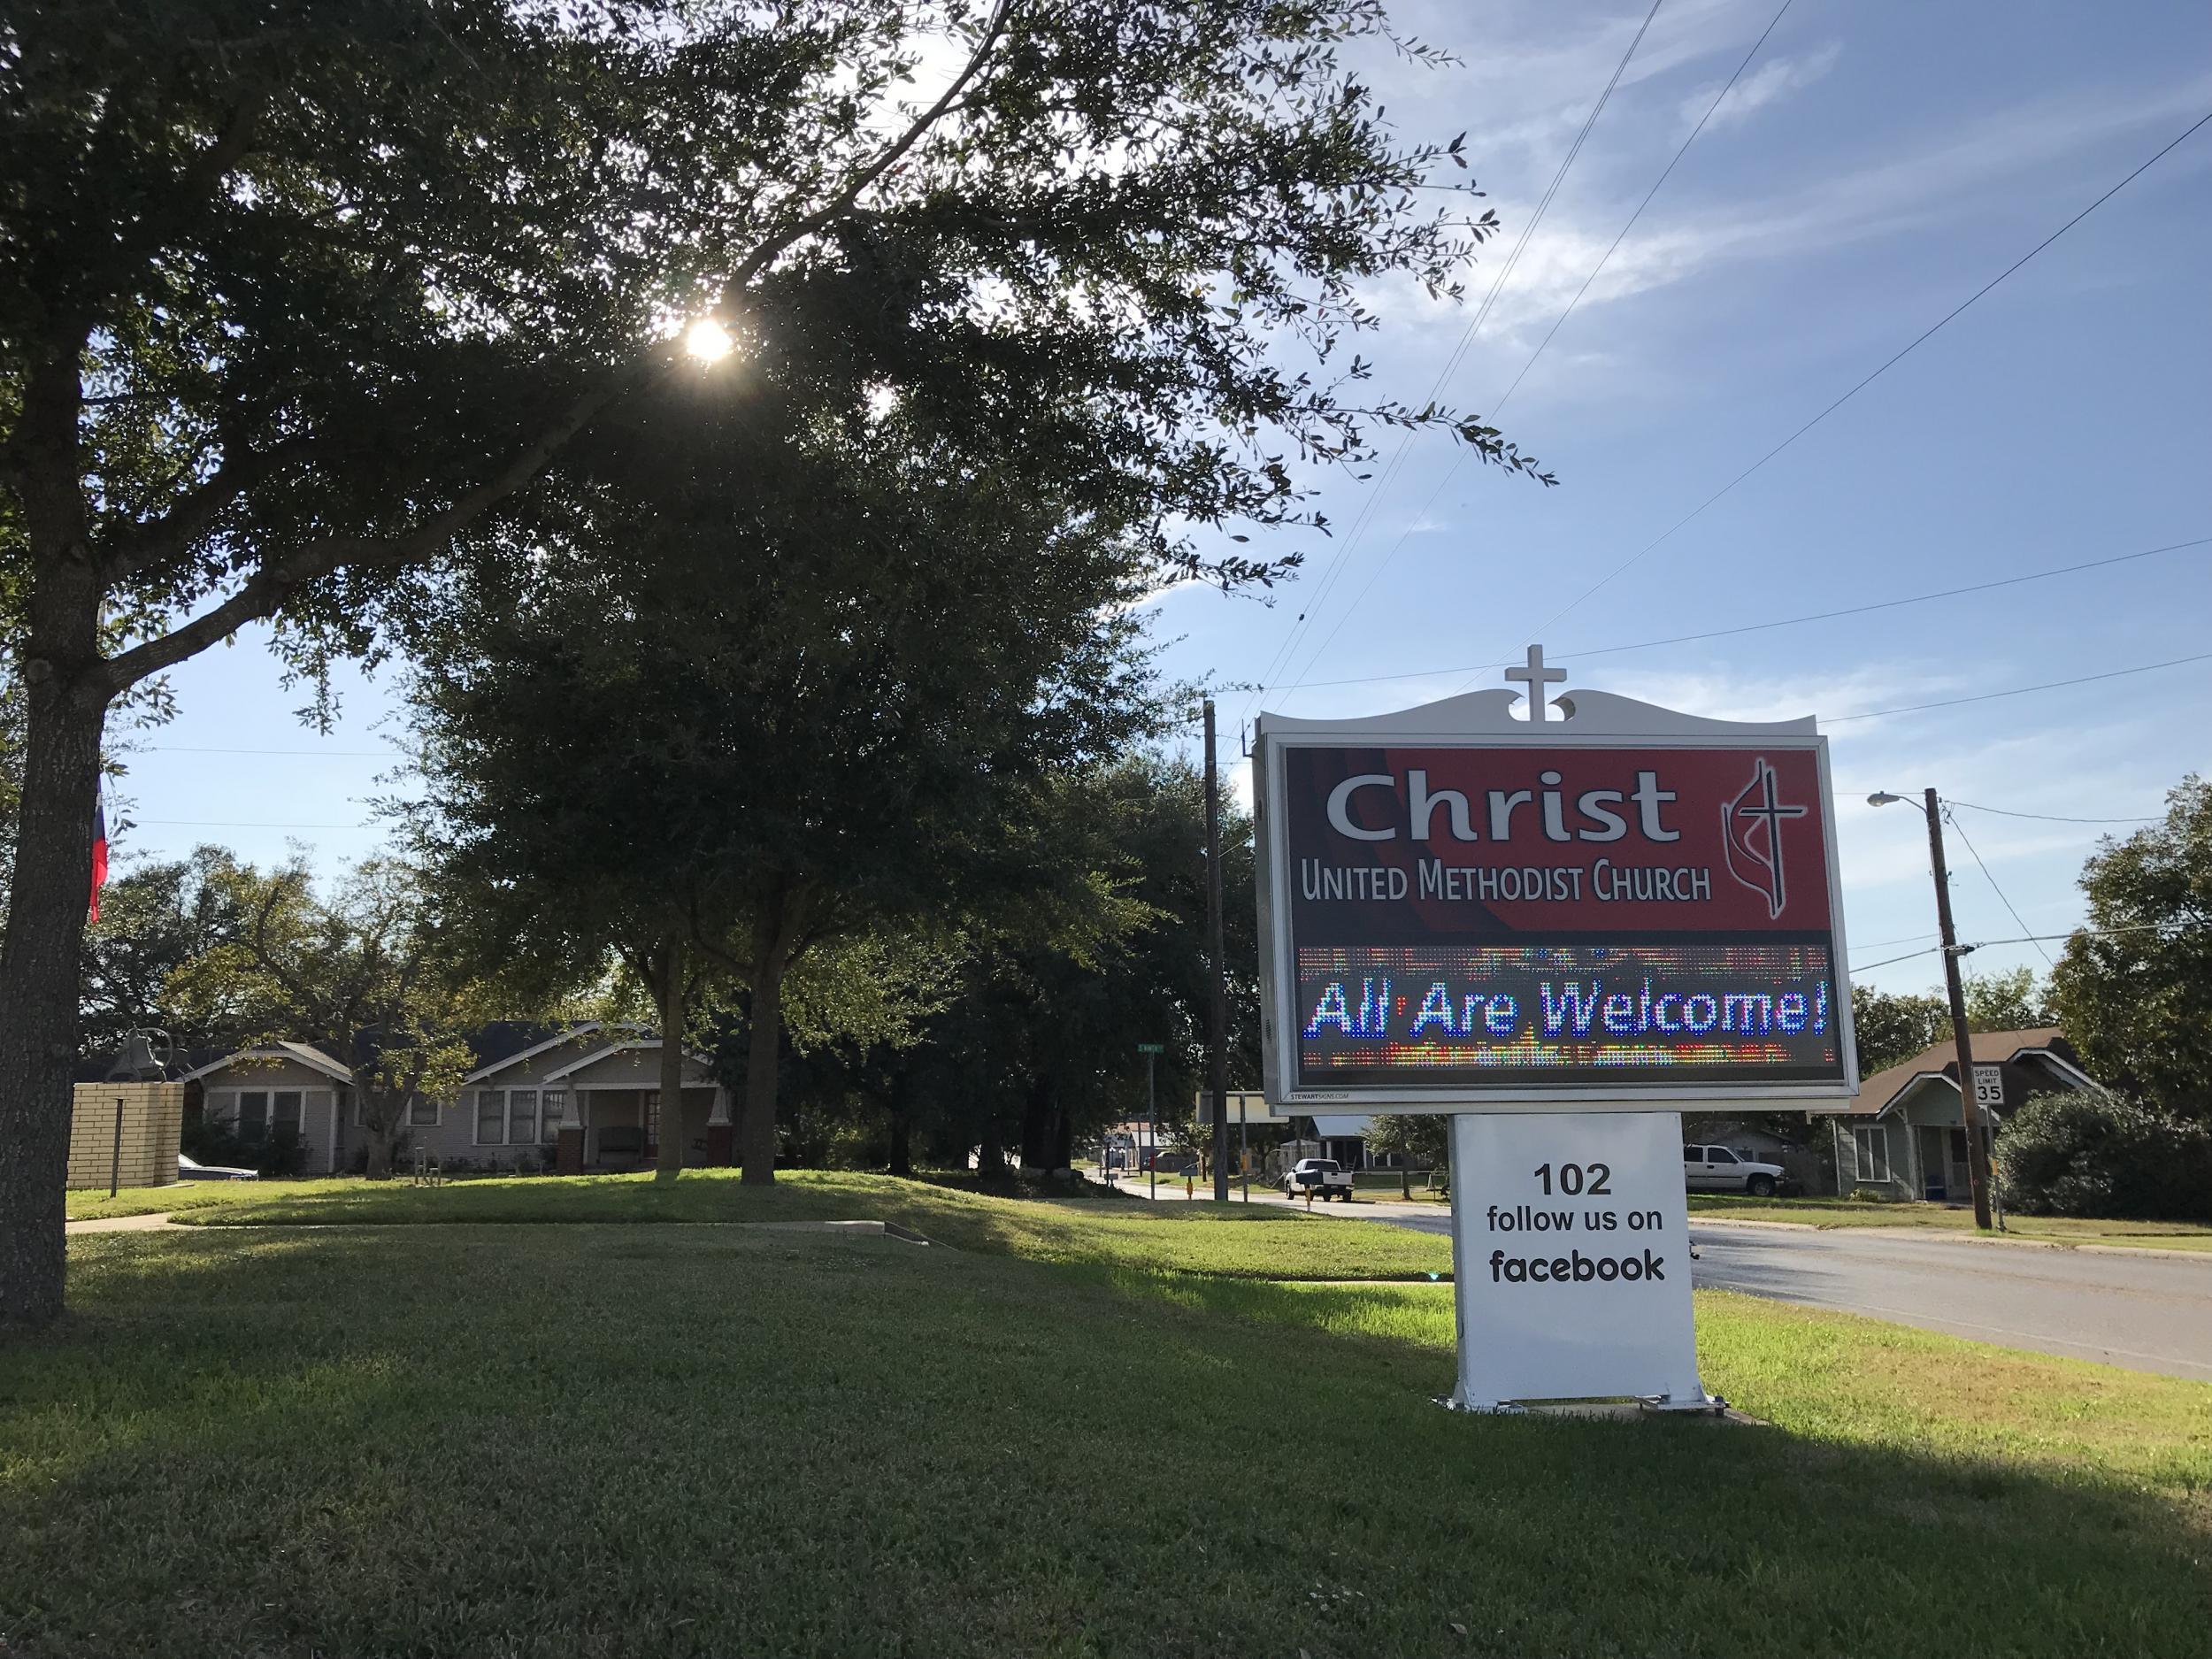 The United Methodist Church in Stockdale, Texas